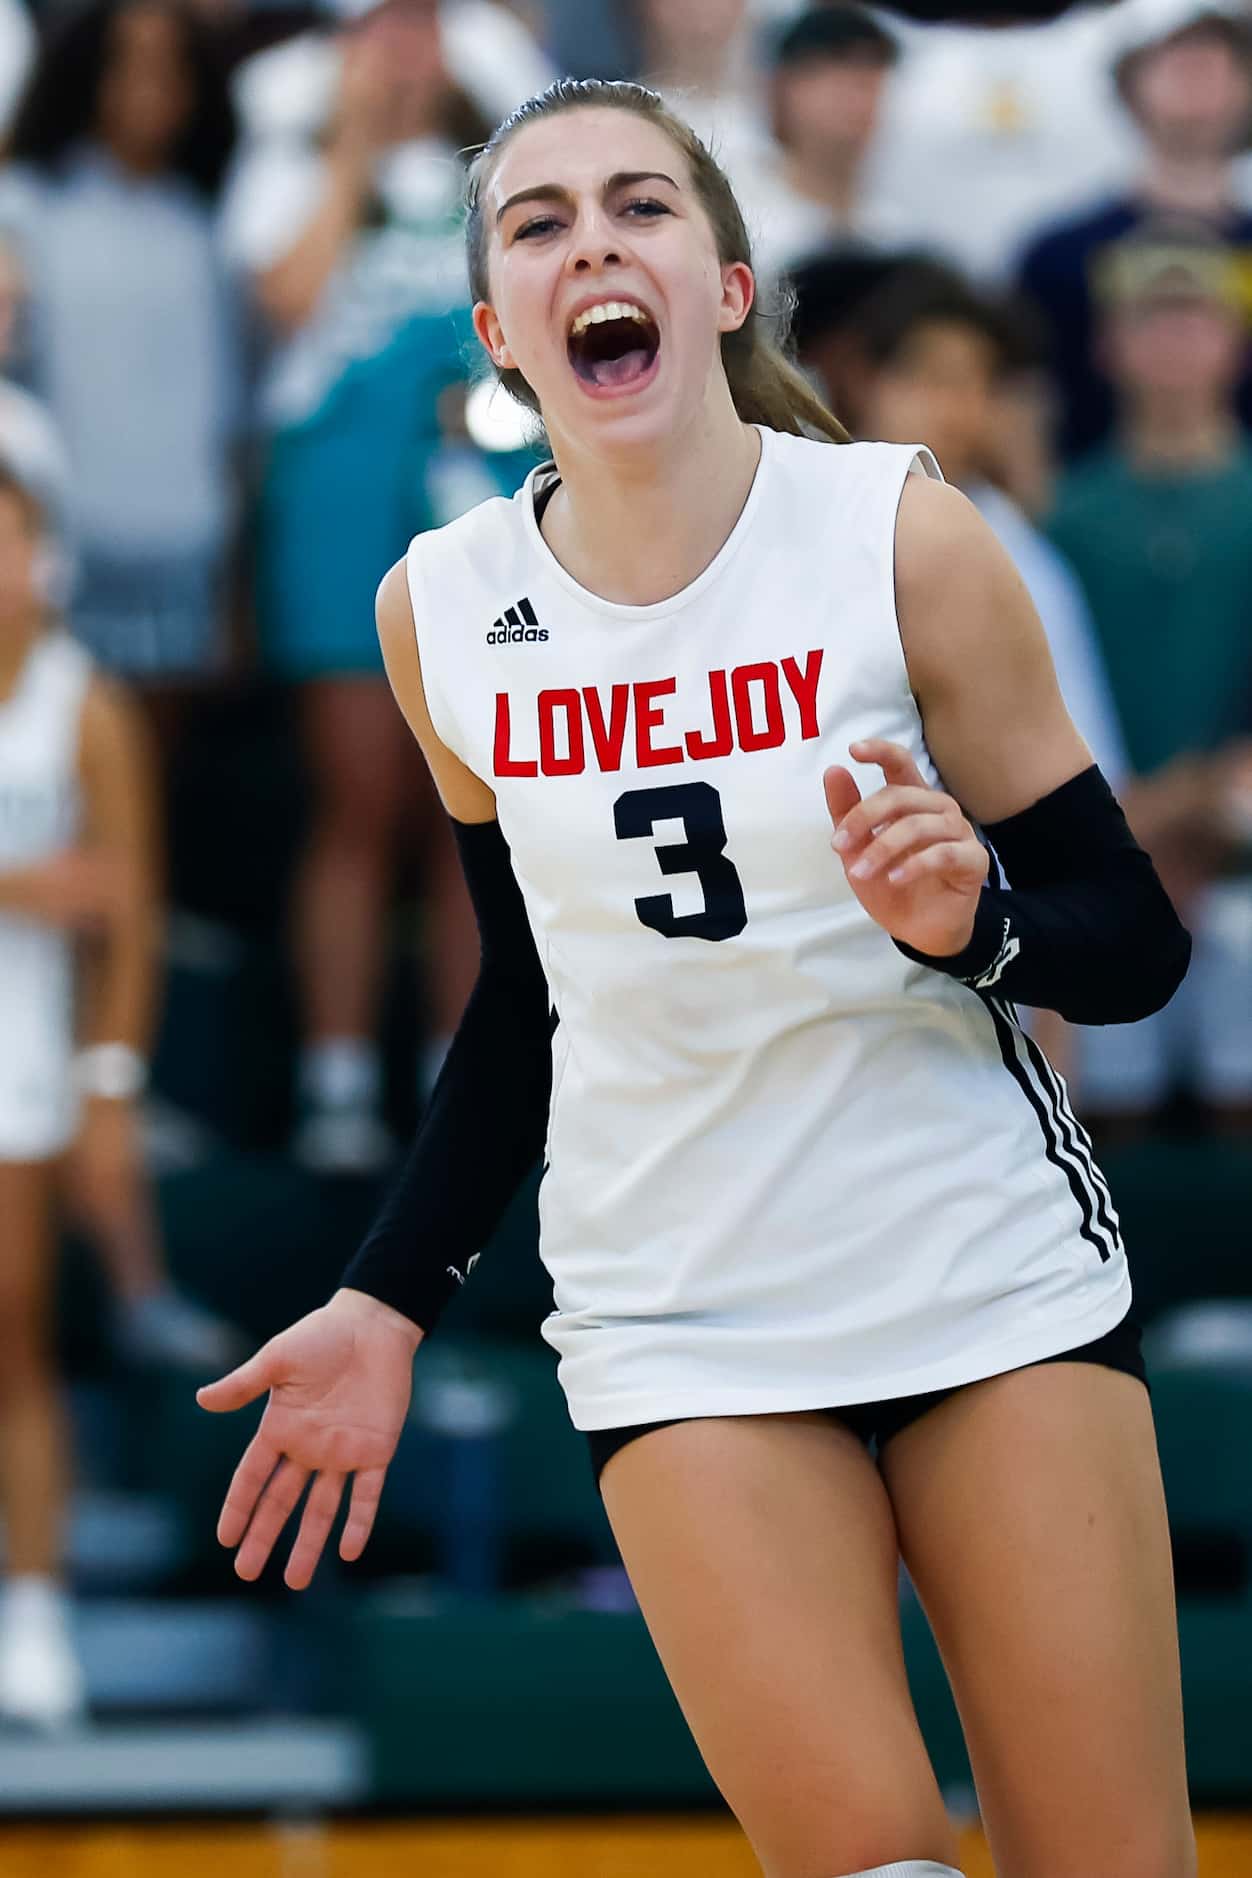 Love Joy senior libero McKenna Brand celebrates a point during a high school volleyball...